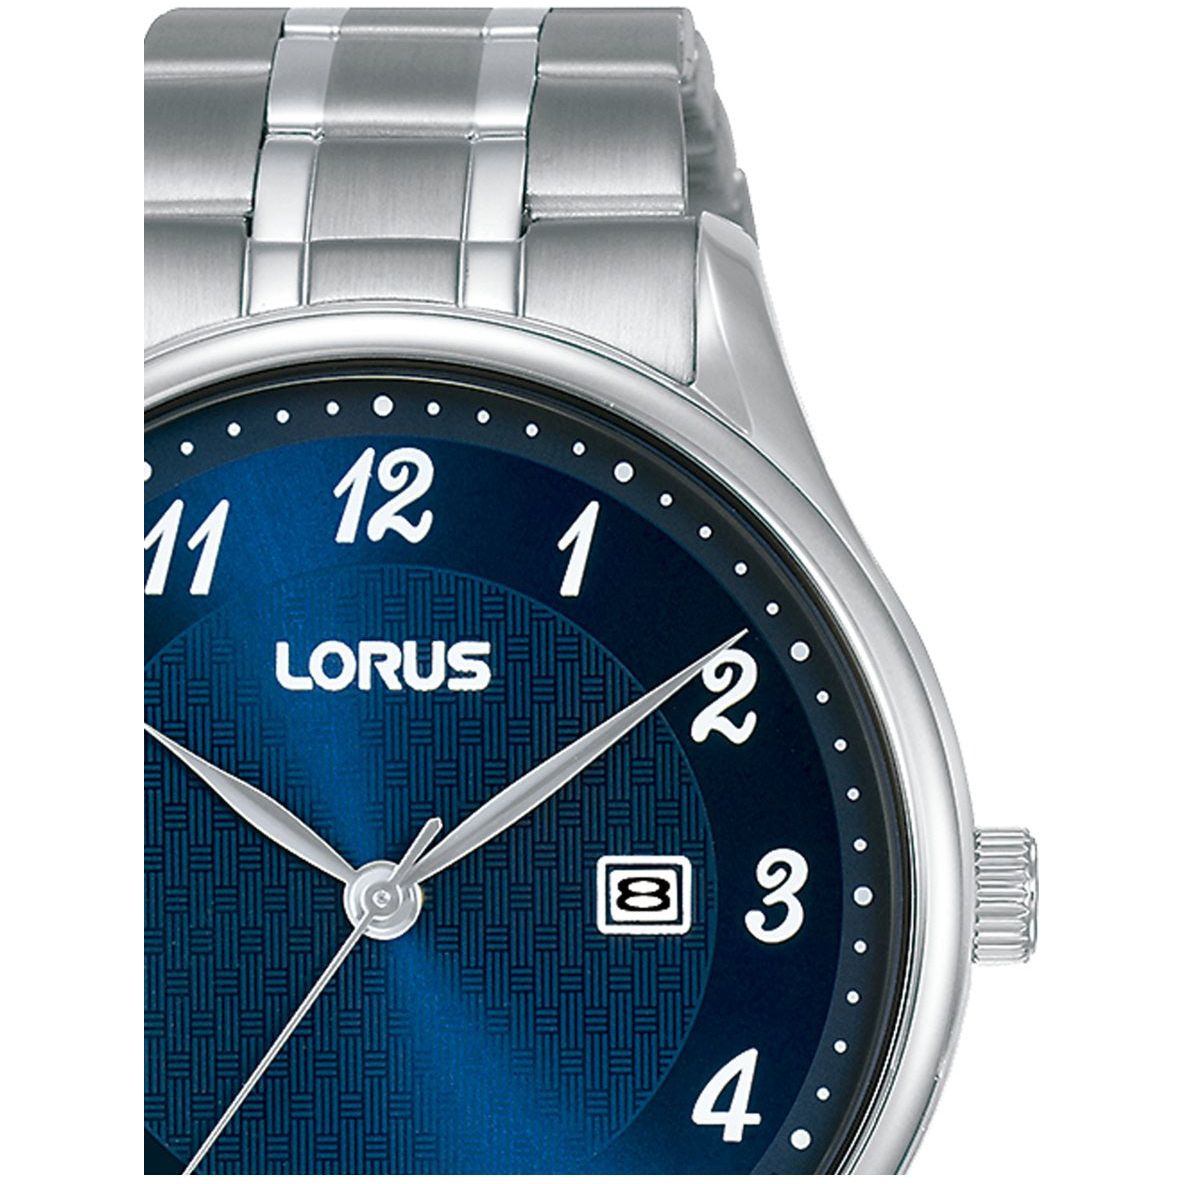 LORUS LOTUS WATCHES Mod. RH905PX9 WATCHES lotus-watches-mod-rh905px9